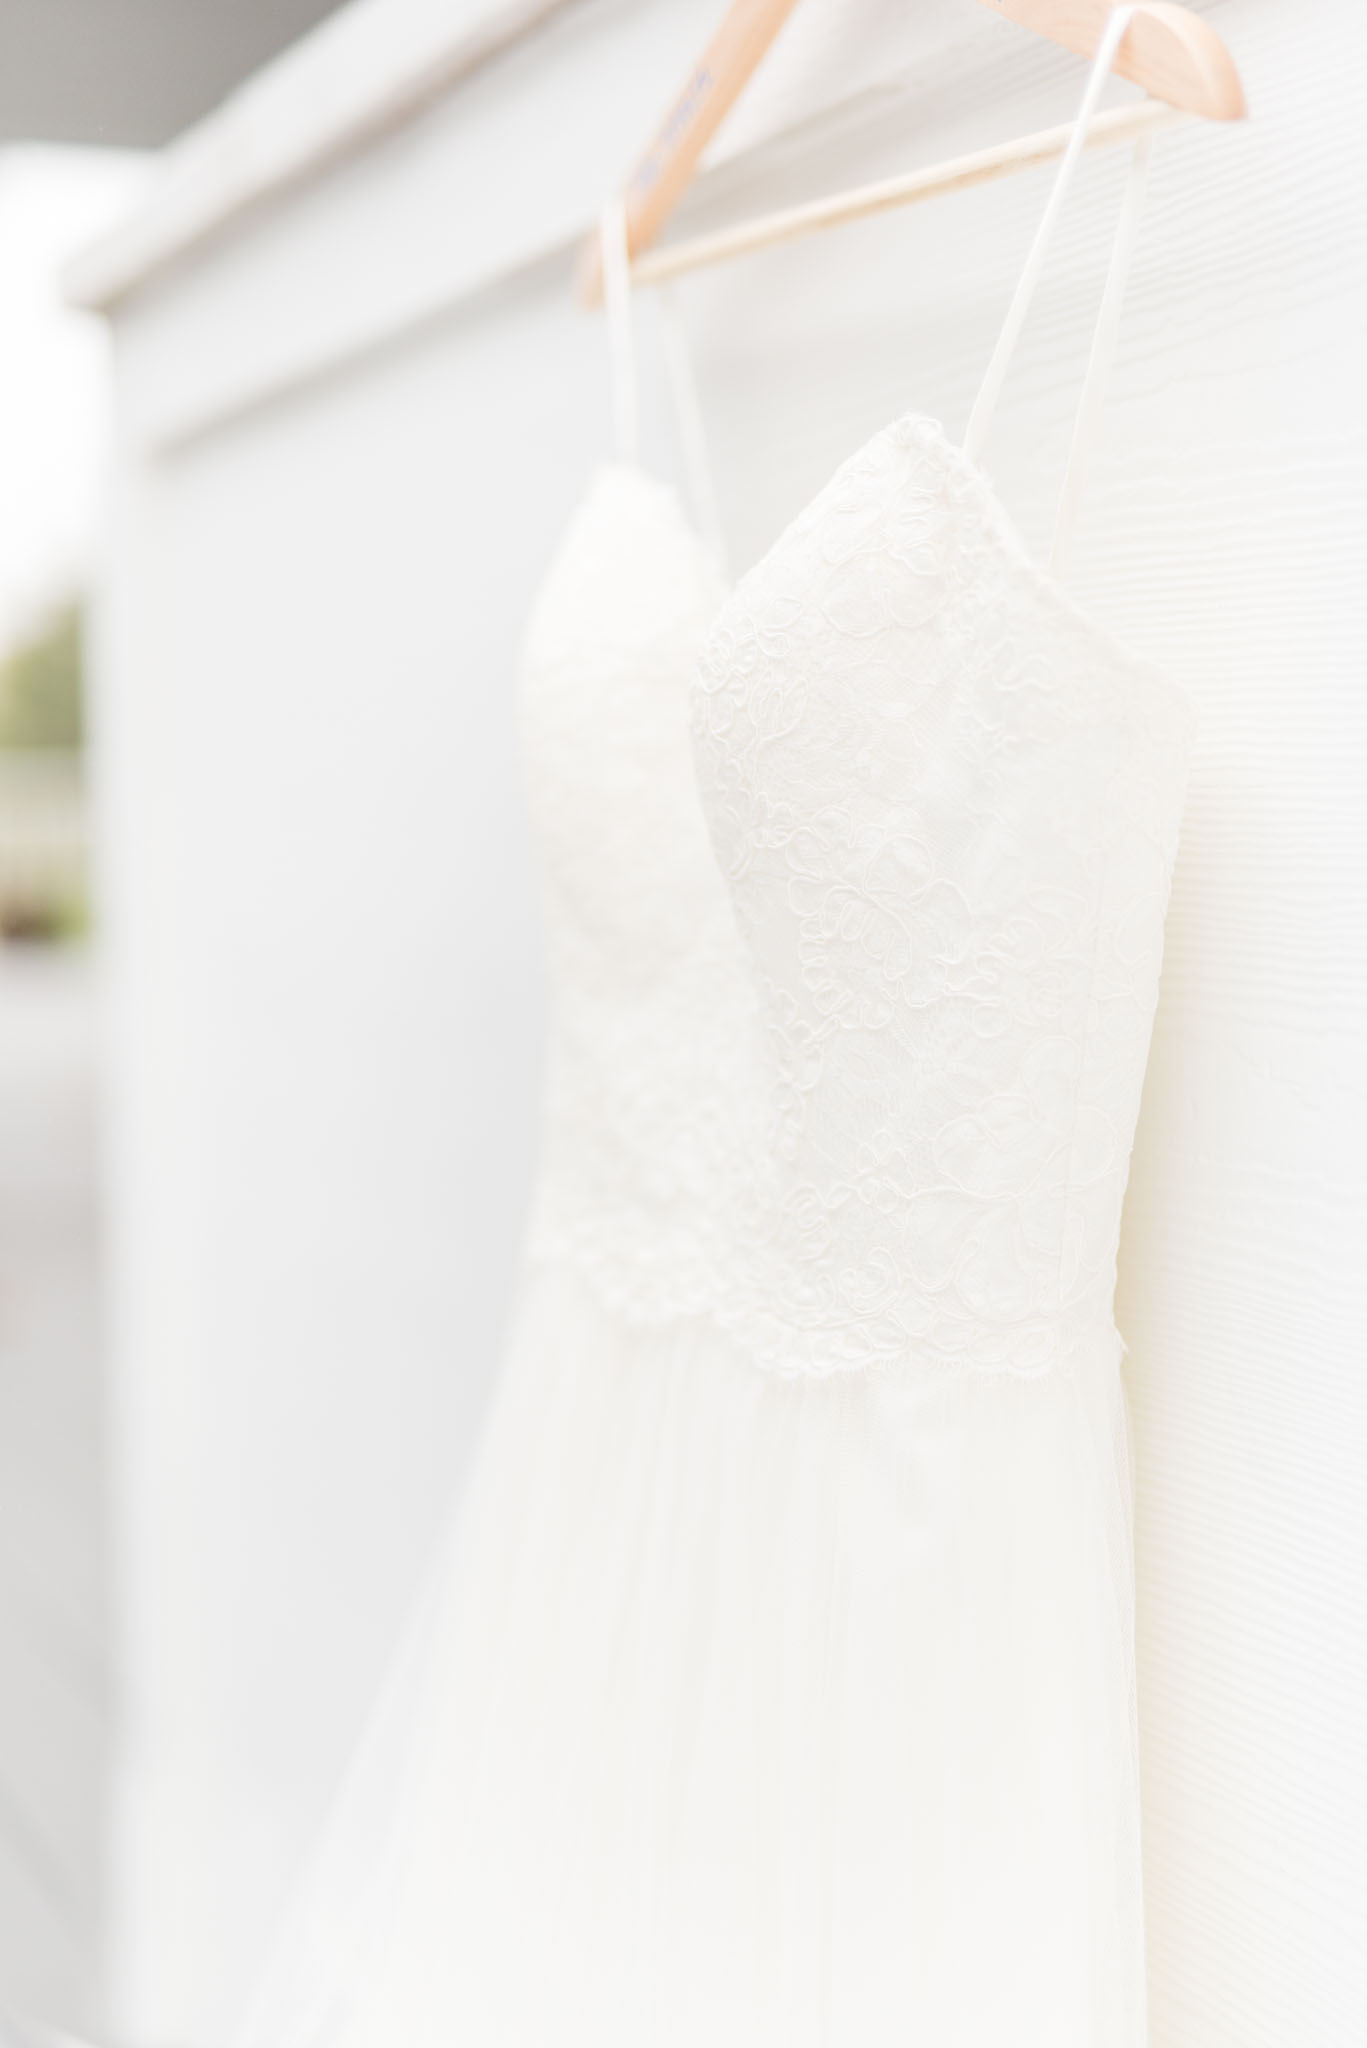 Wedding Dress Hangs on White Wall.